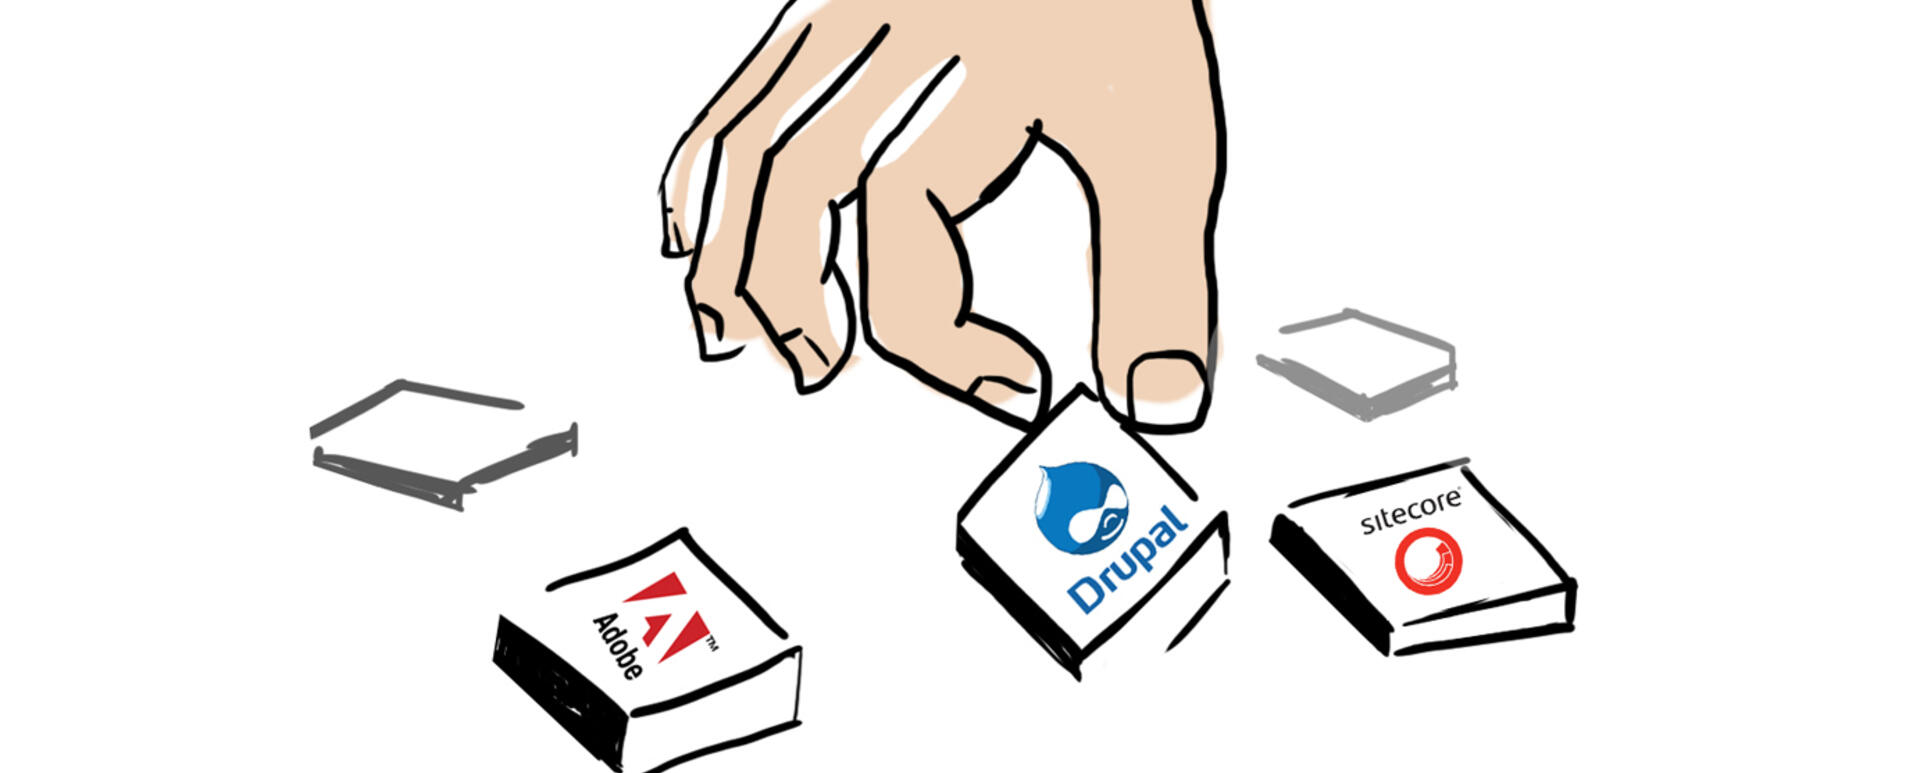 A hand picking Drupal logo among other poplar cmf-s